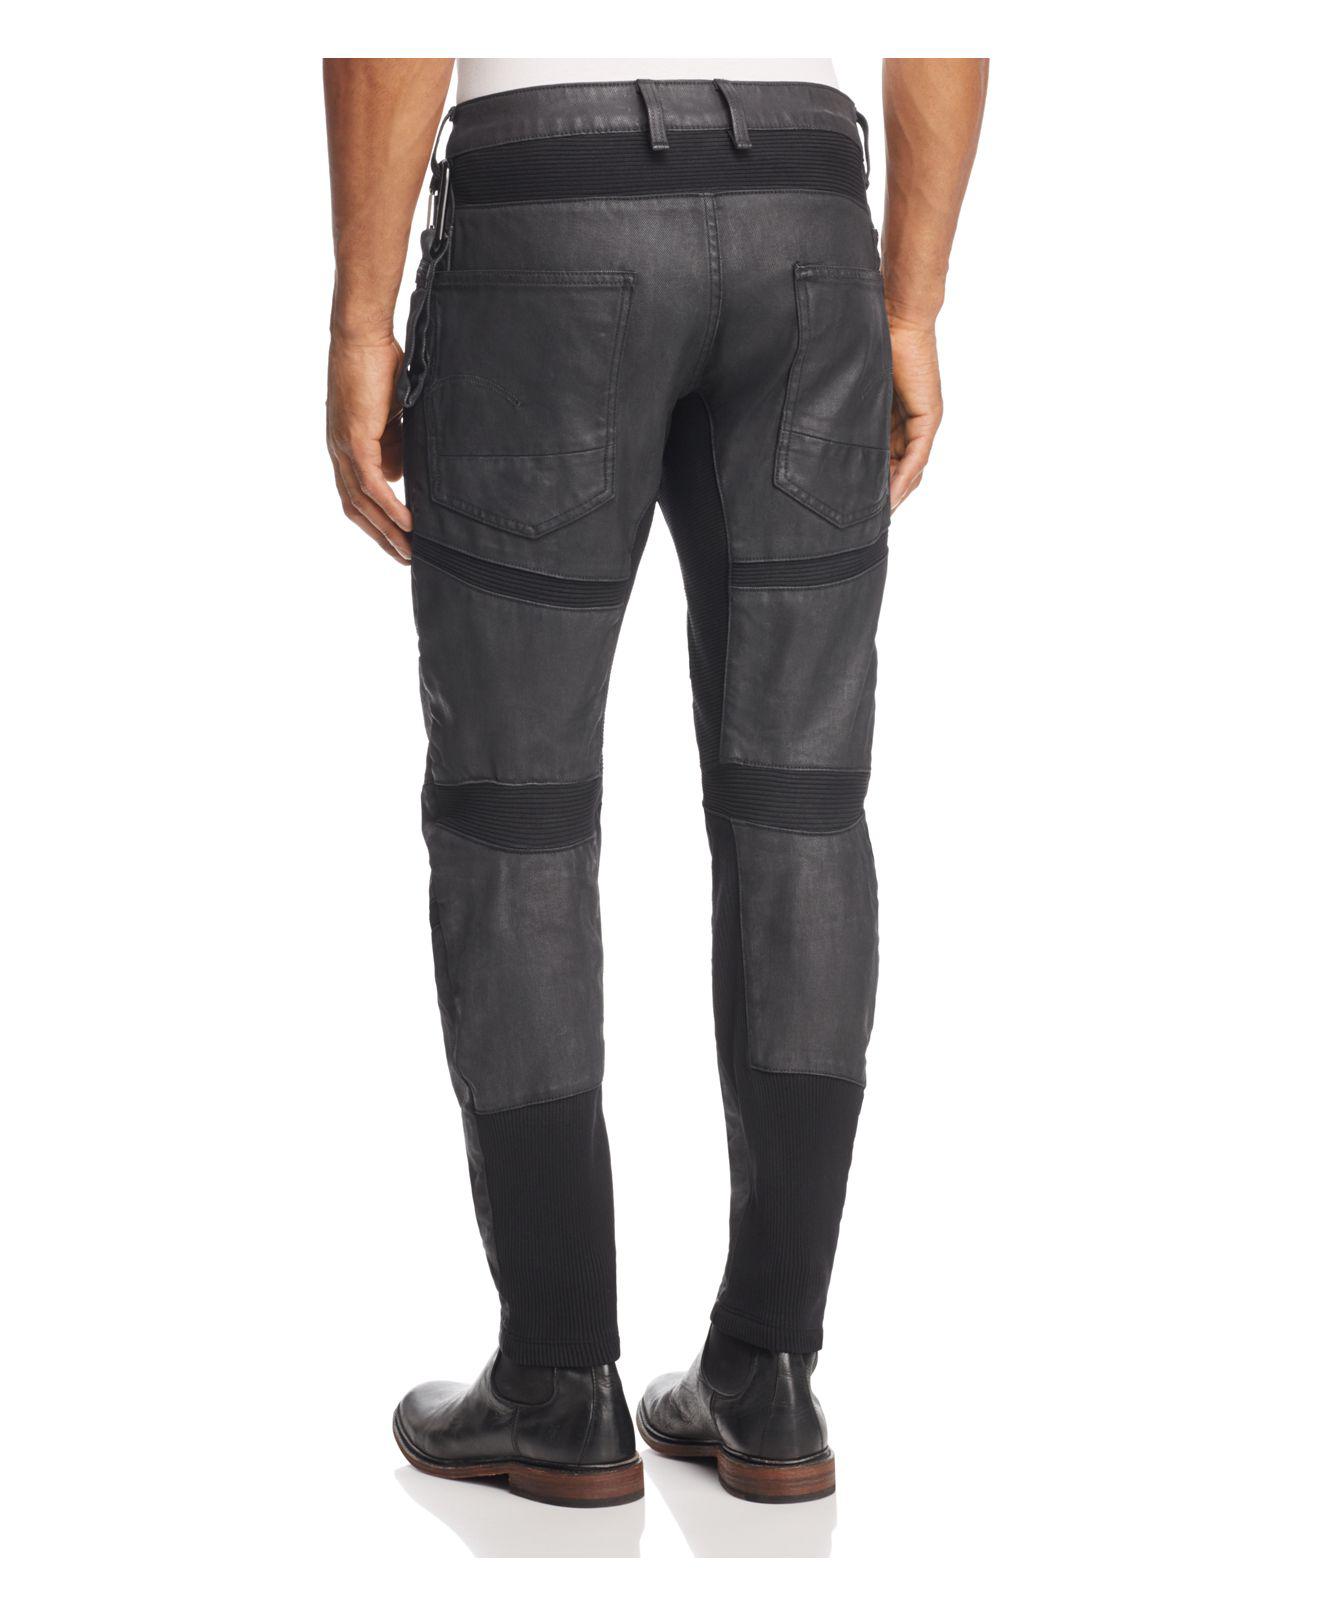 Lyst - G-Star Raw Motac 3d Slim Fit Coated Jeans In Dark Grey in Gray ...